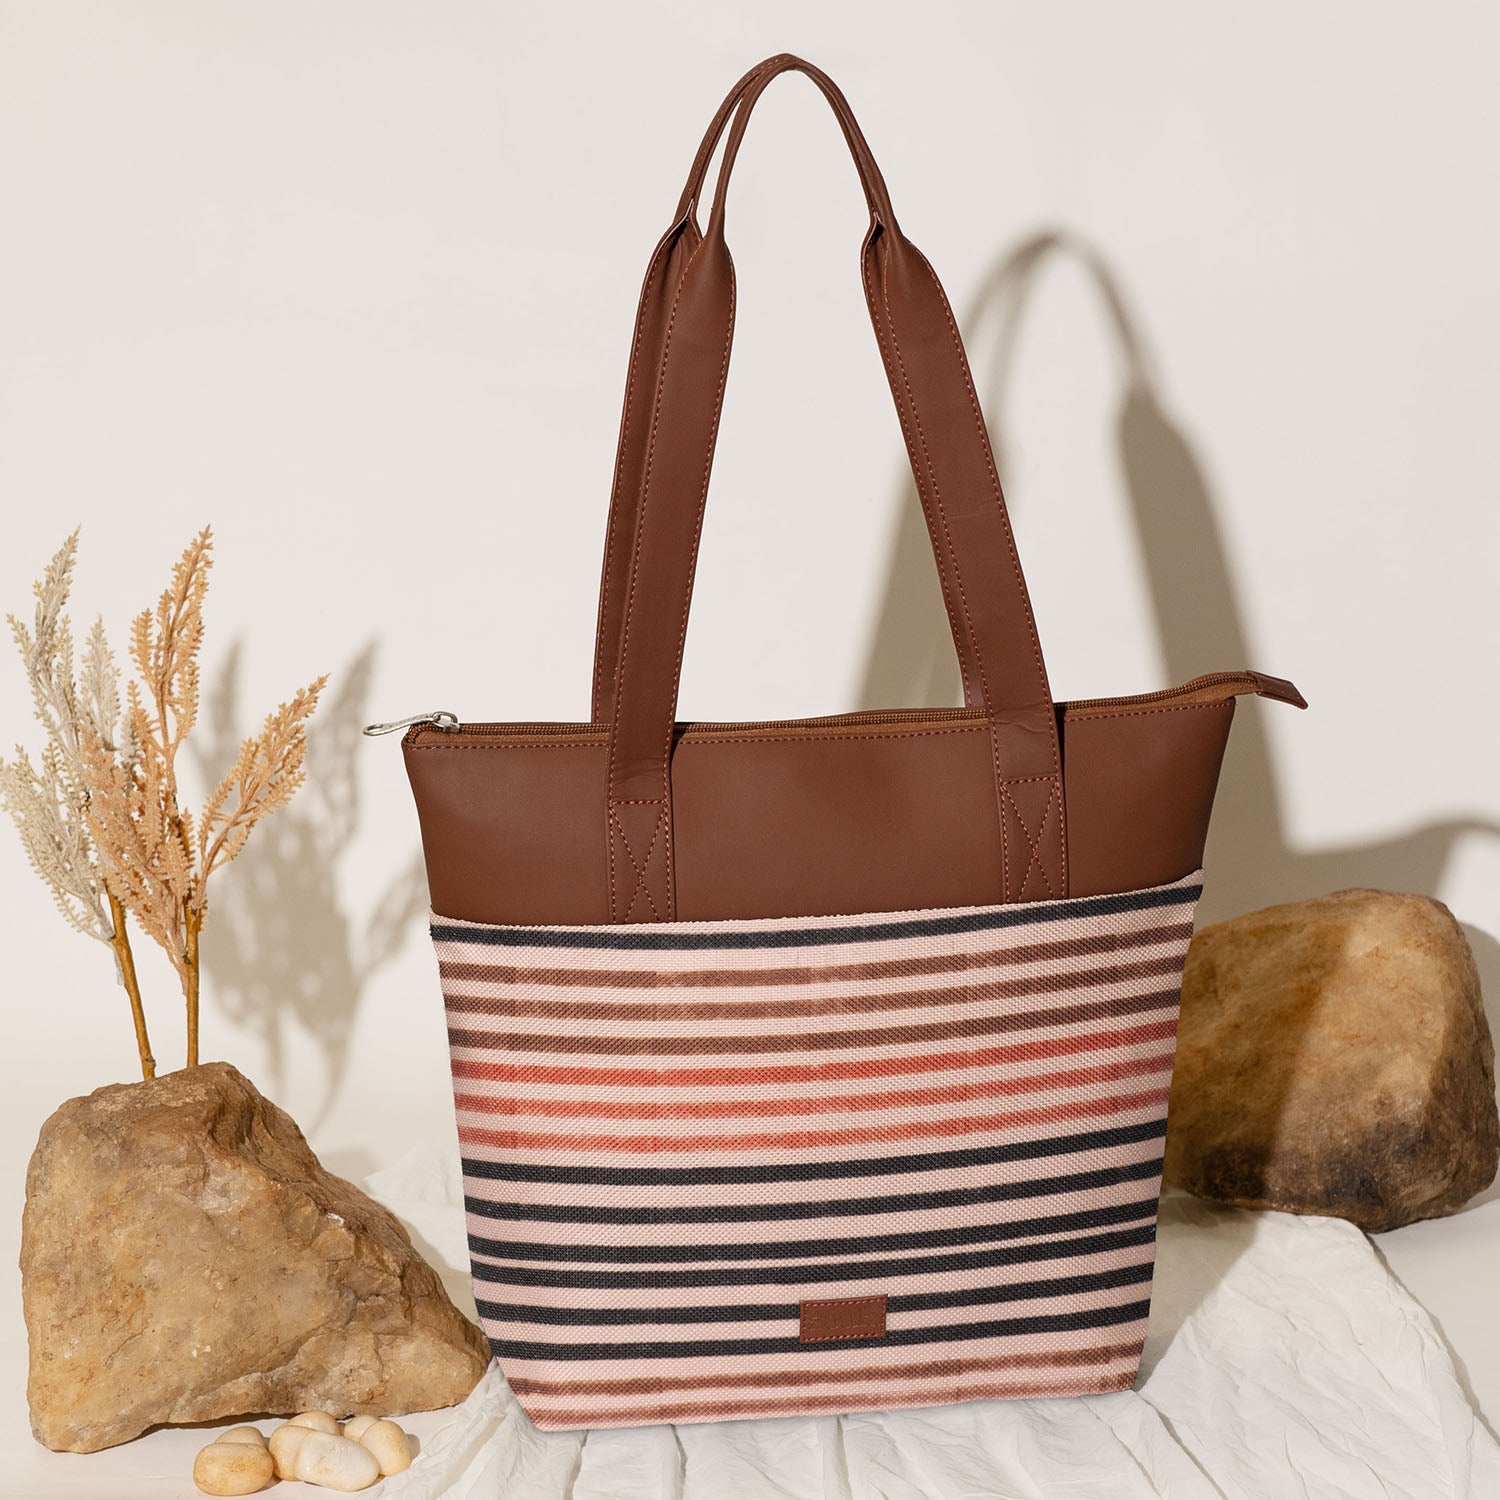 Buy Mast & Harbour Brown & Black Striped Sling Bag - Handbags for Women  11154516 | Myntra